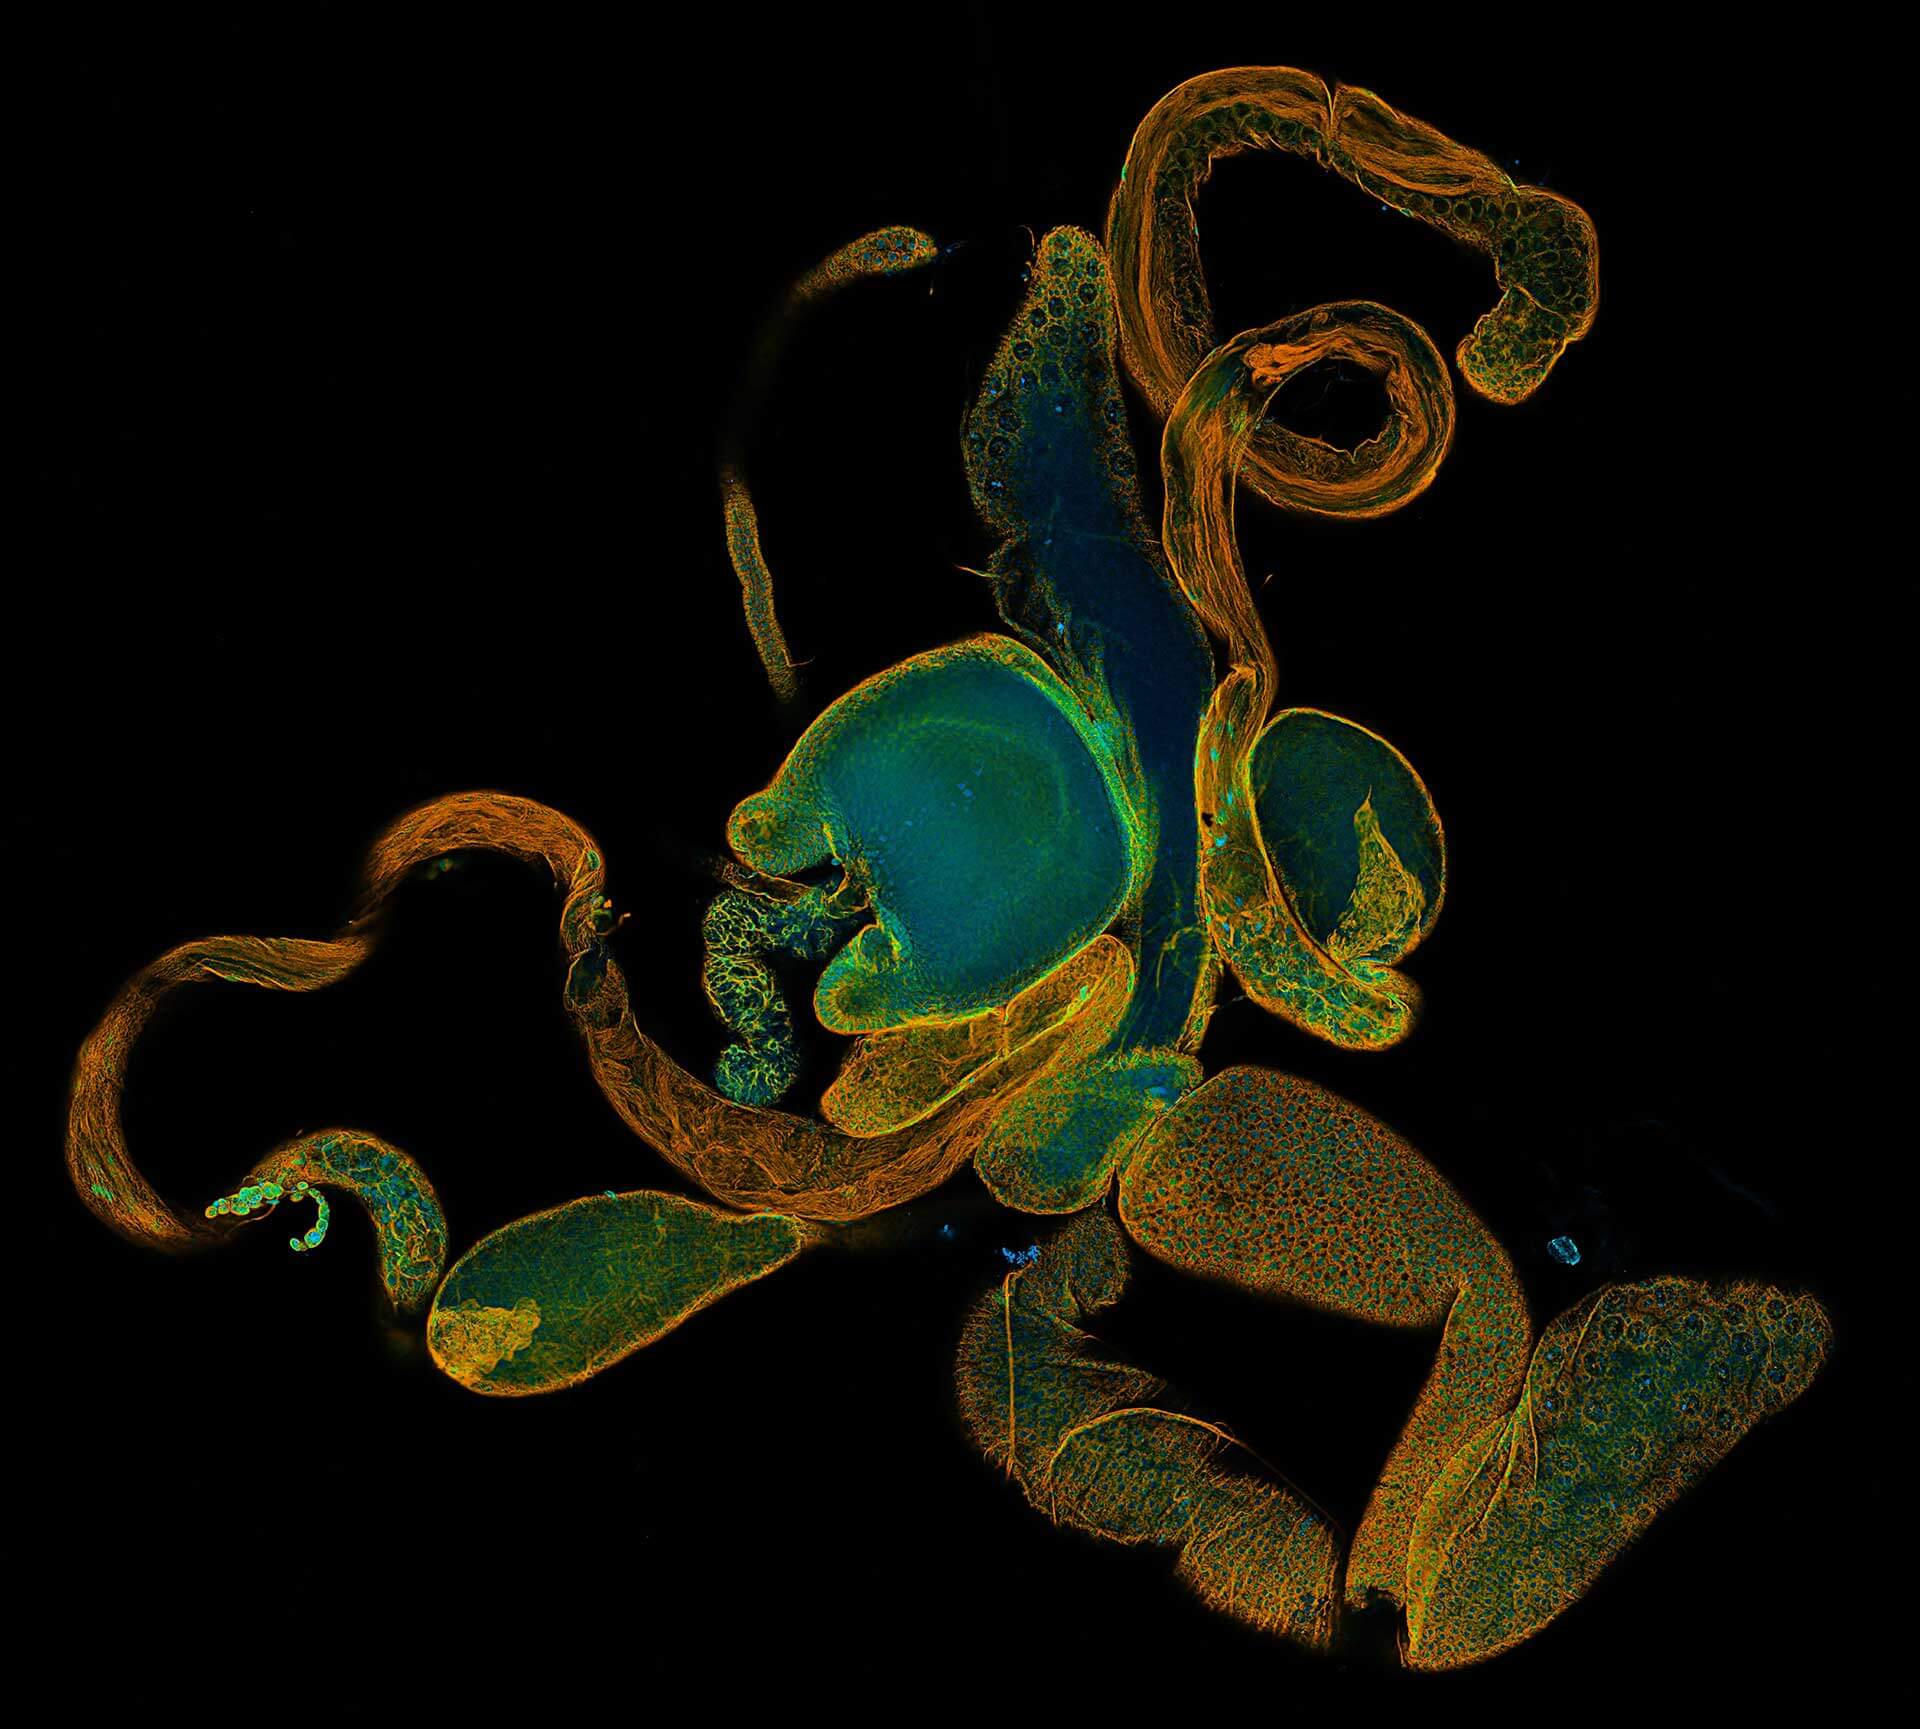 Tiled and stitched image of drosophila testis.